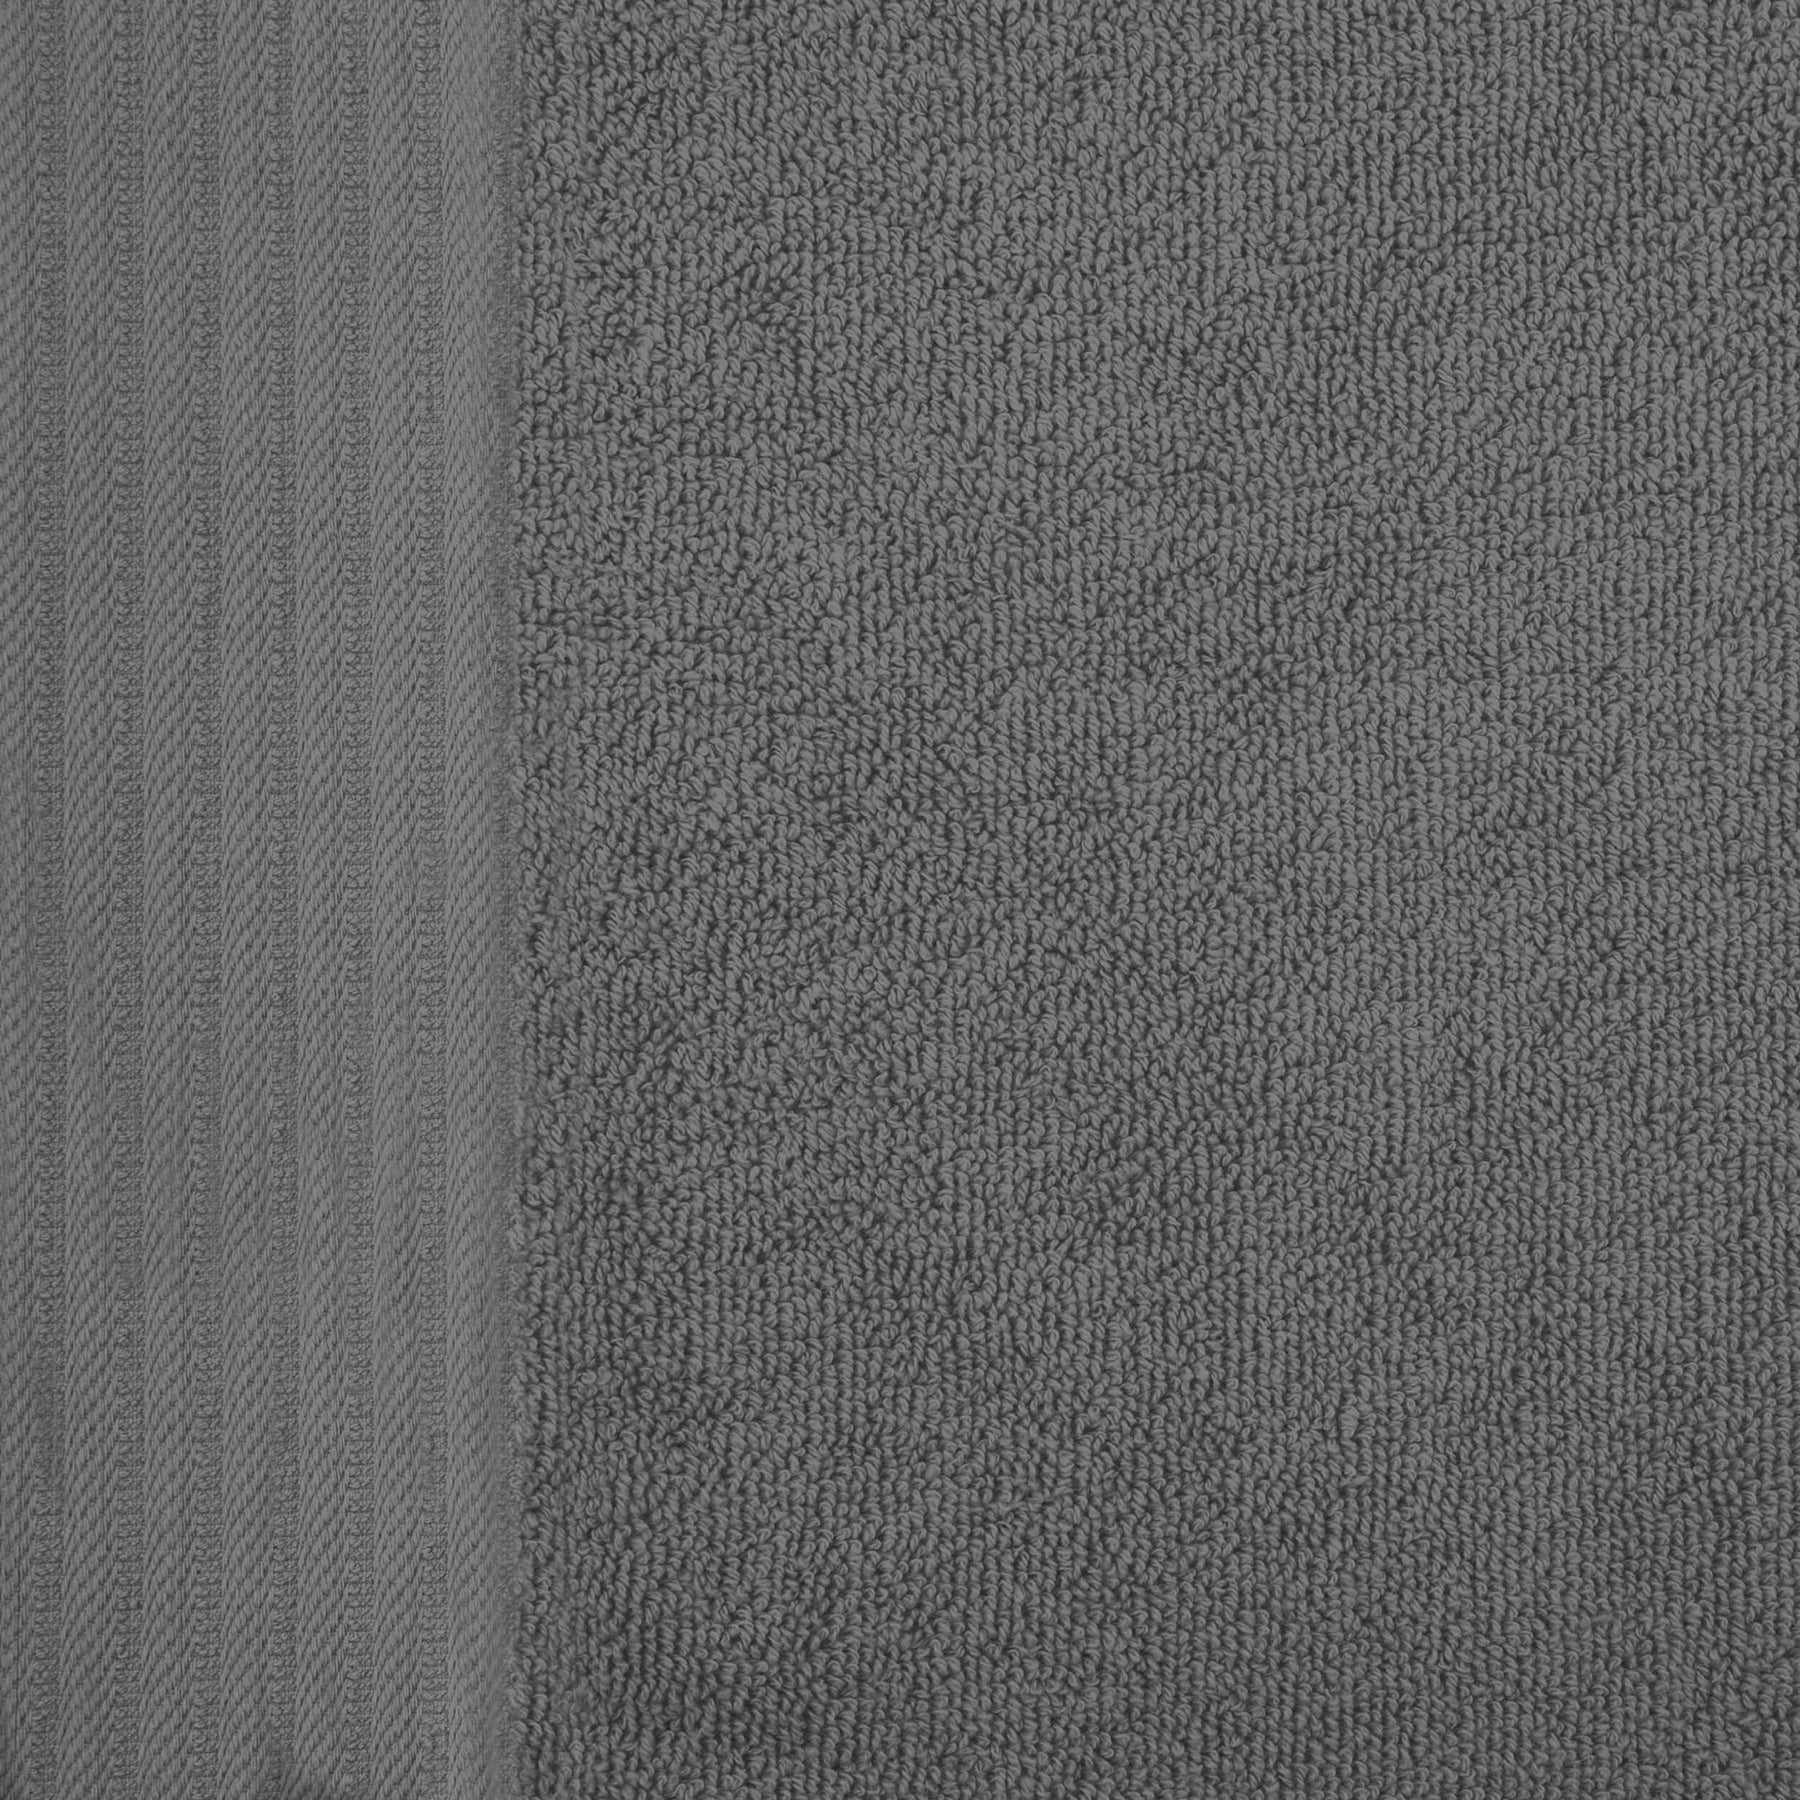 Premium Turkish Cotton Jacquard Herringbone and Solid 6-Piece Hand Towel Set - Grey